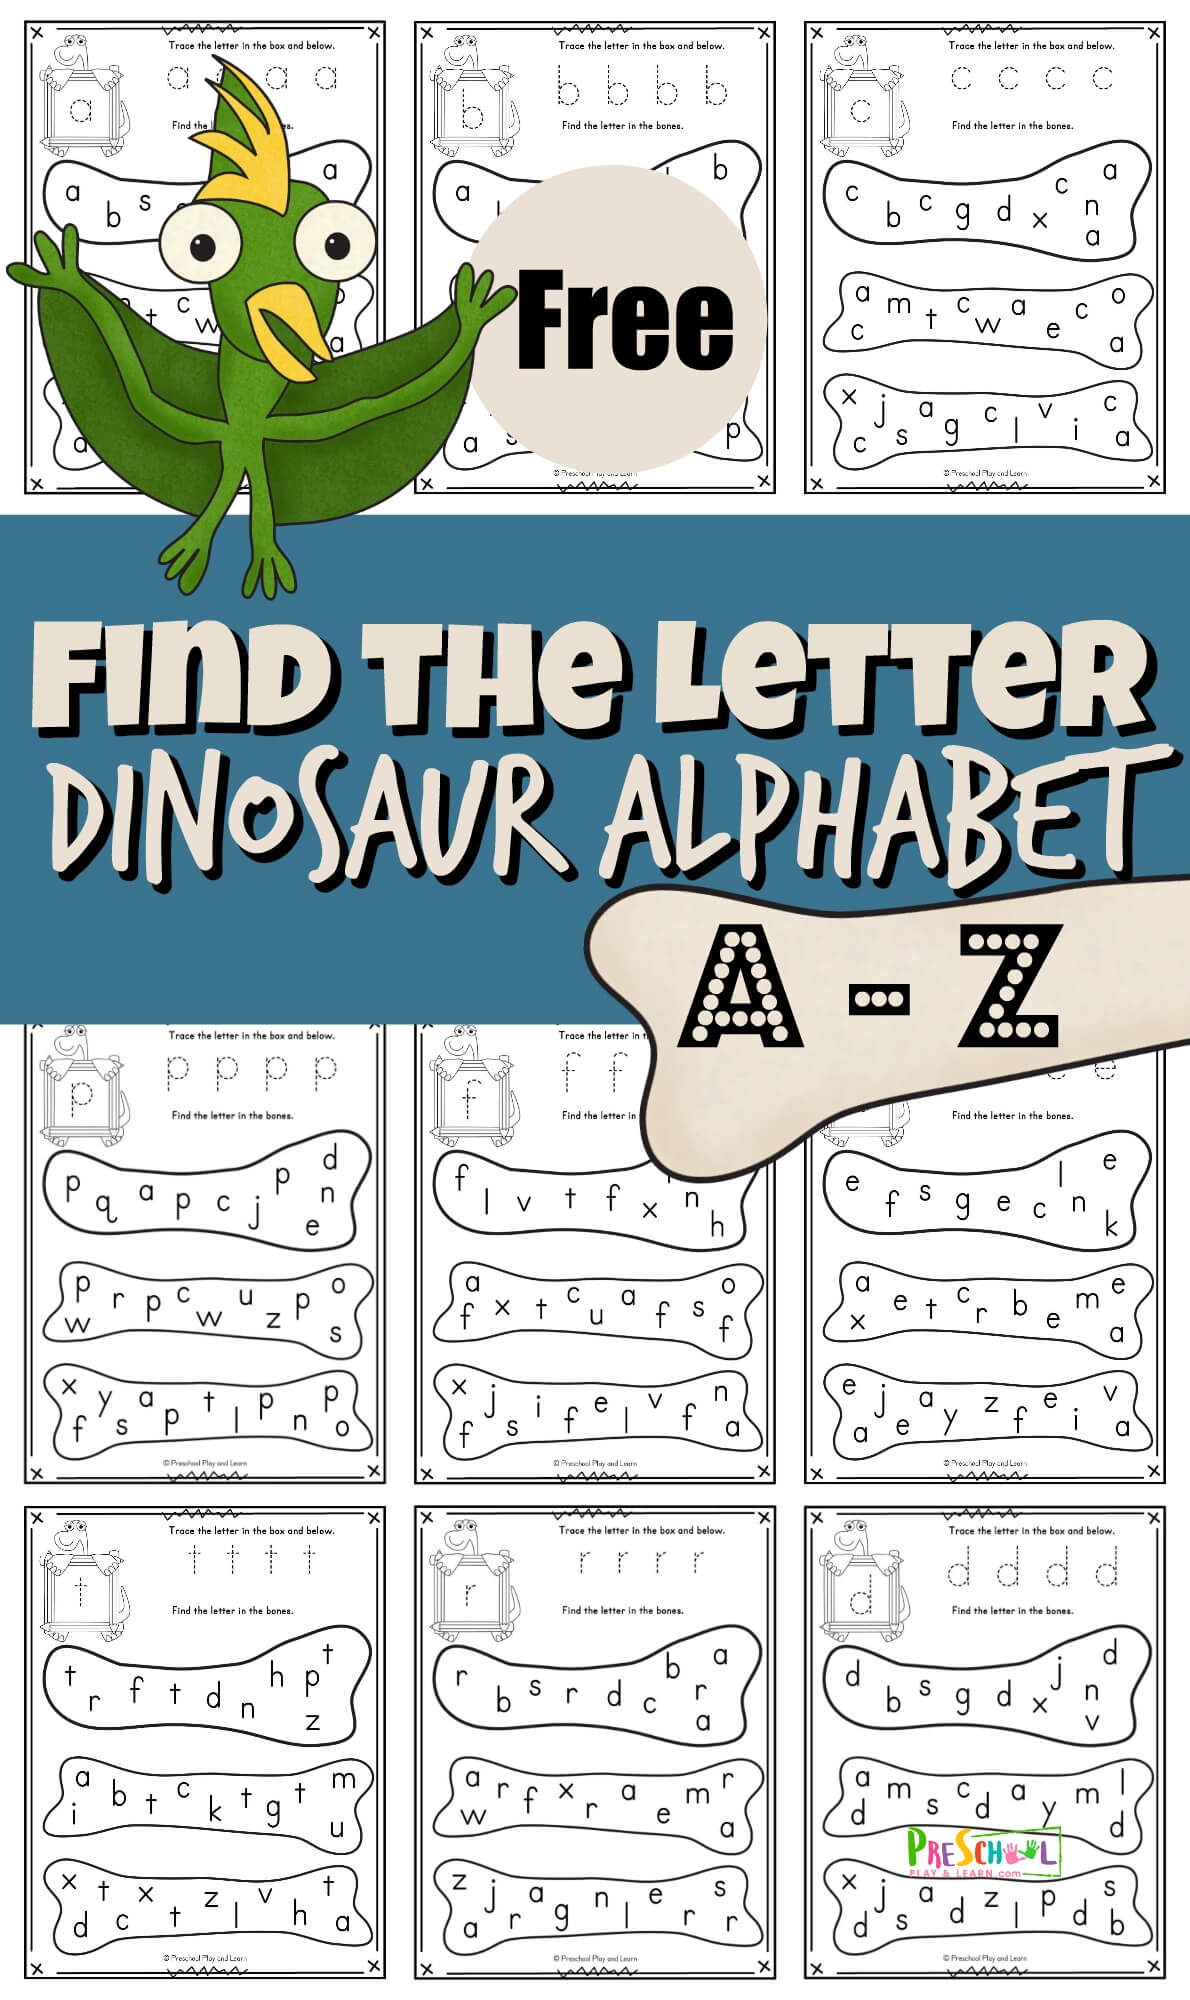 free-find-the-letter-dinosaur-alphabet-fun